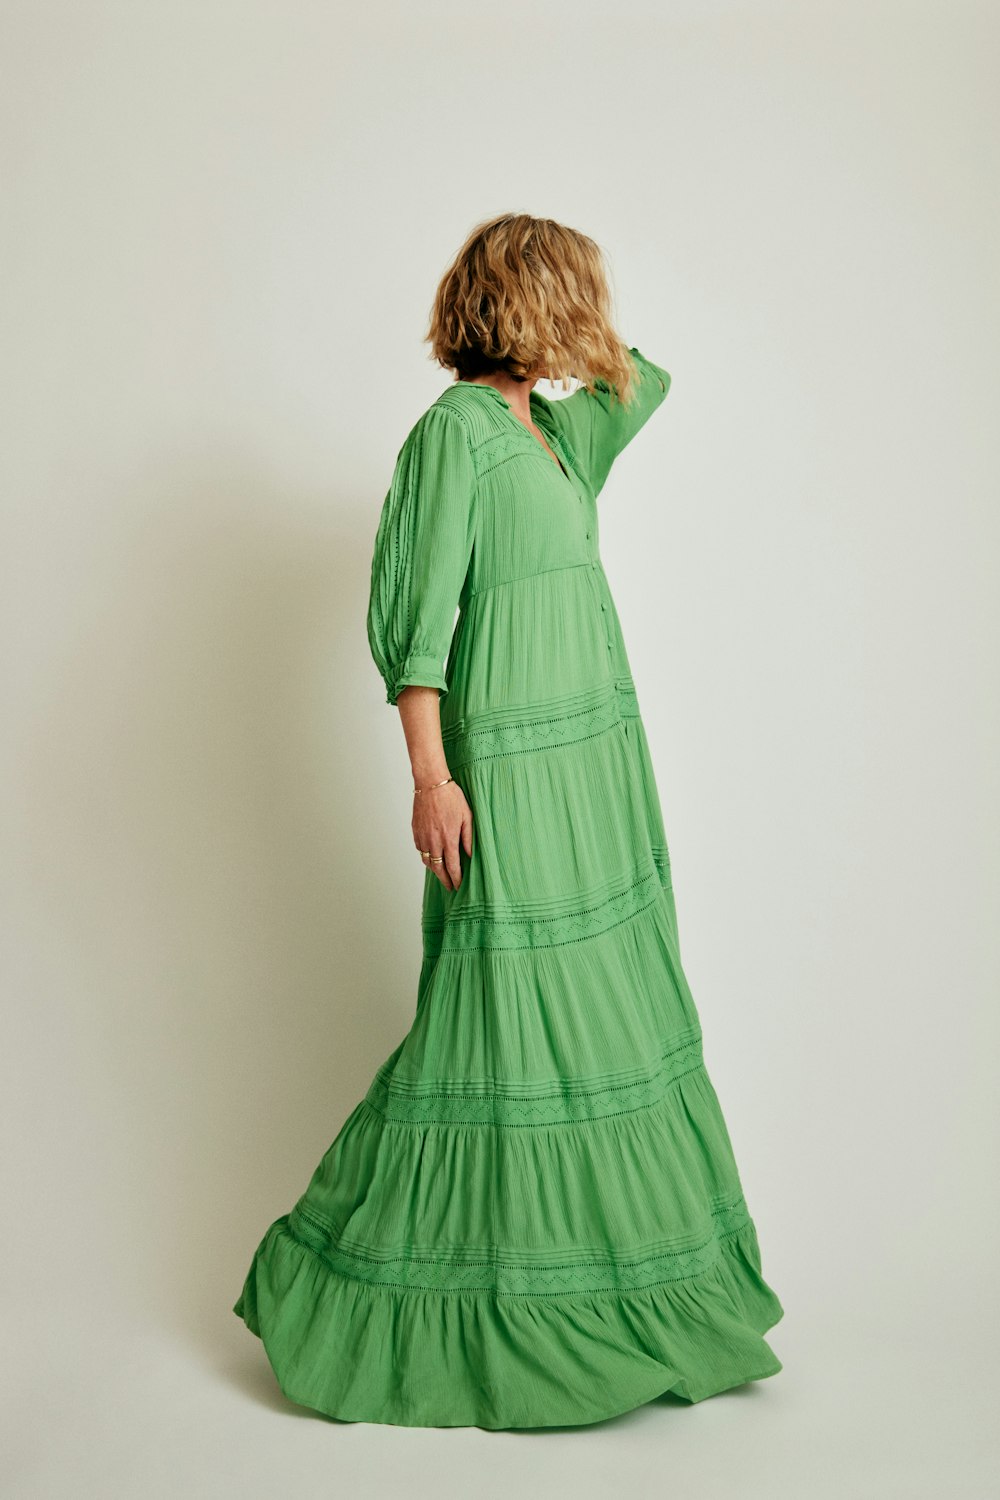 a woman in a long green dress